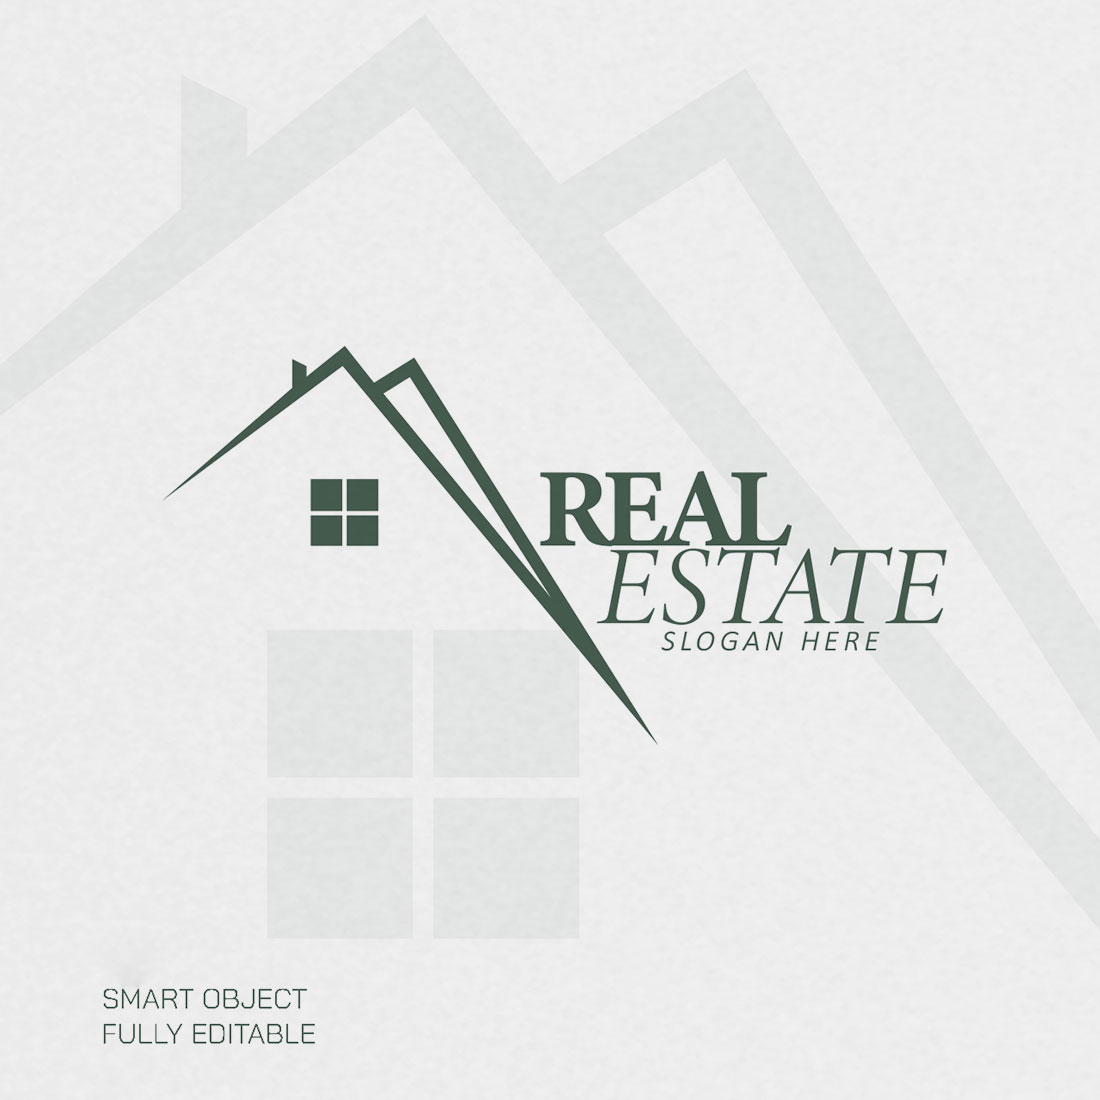 Stylish Realestate Home Logo Design cover image.